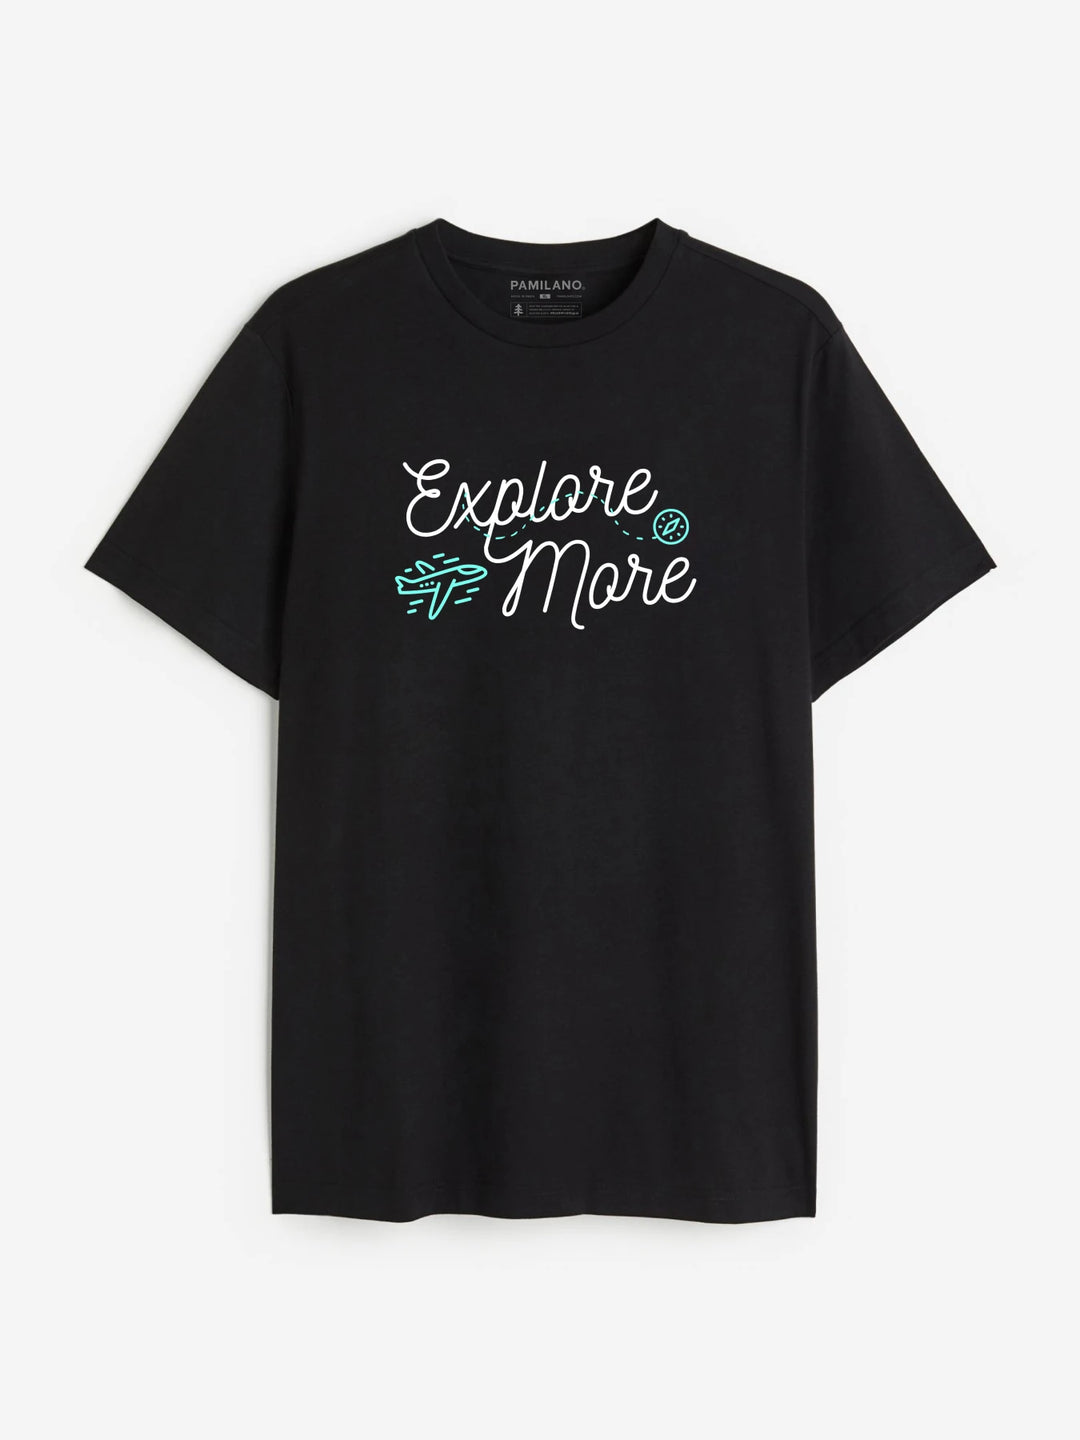 Explore More - Unisex T-Shirt